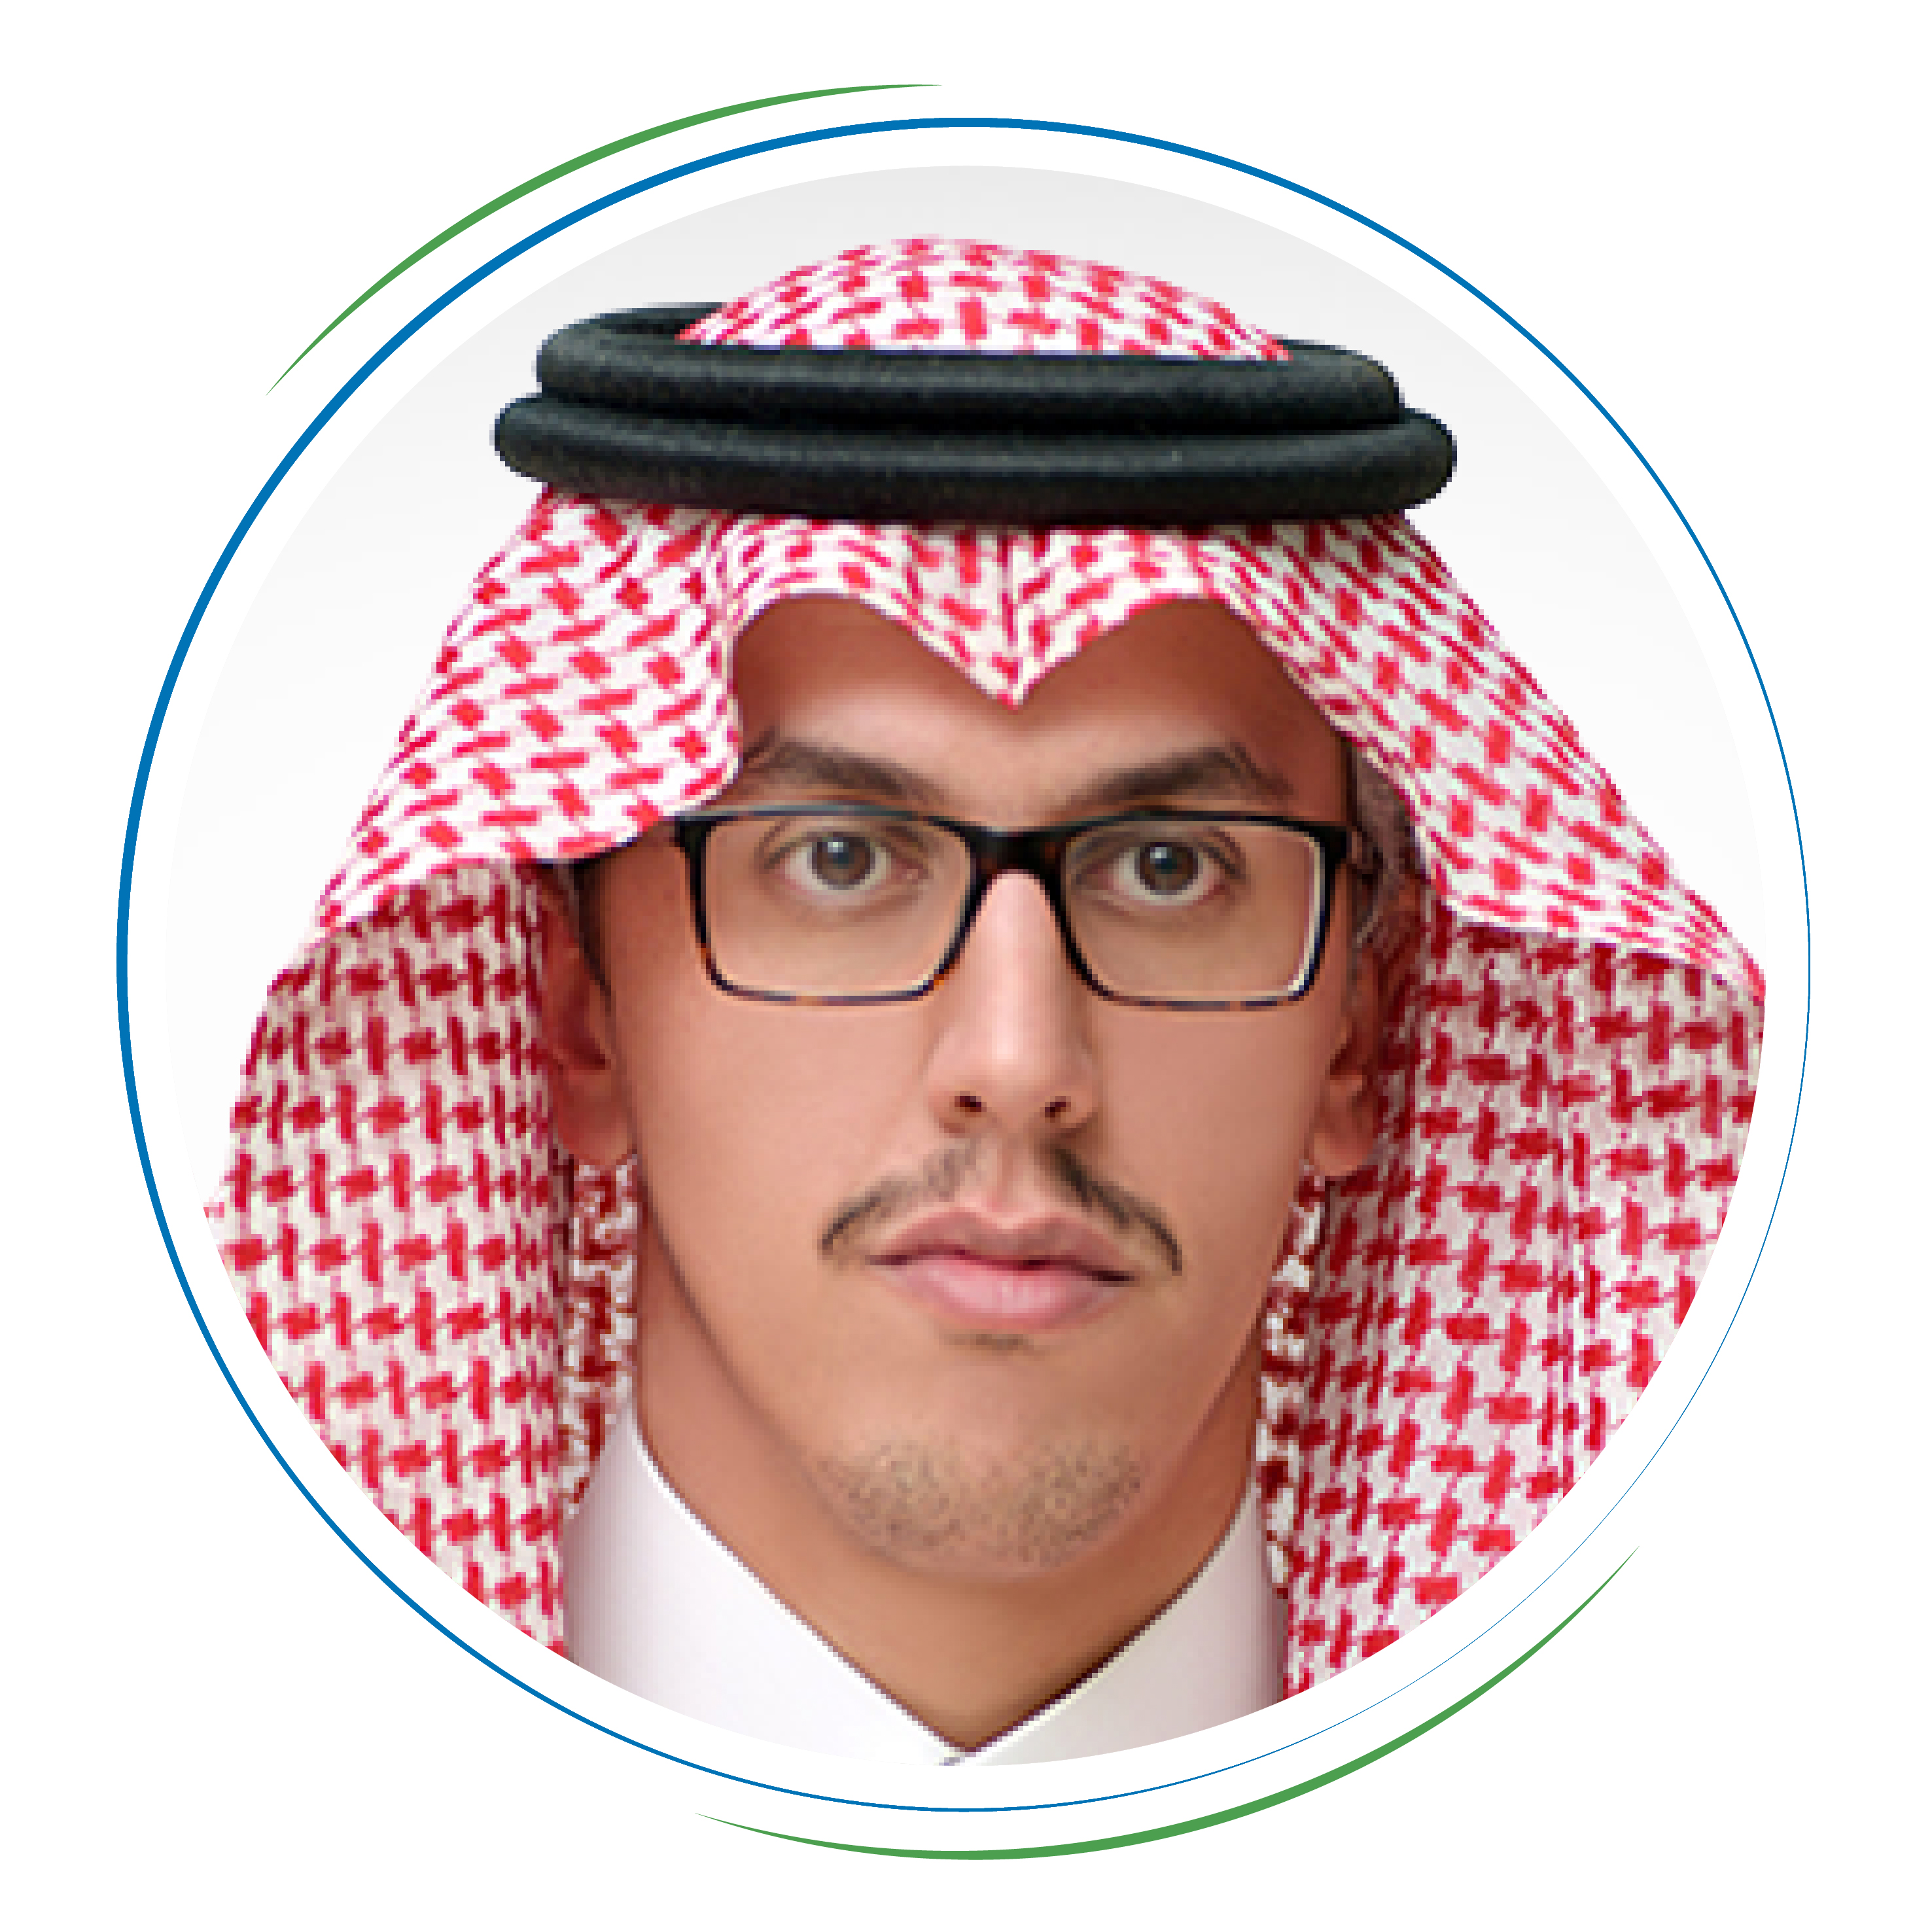 Mr. Mohammed bin Abdullah Al-Haqbani